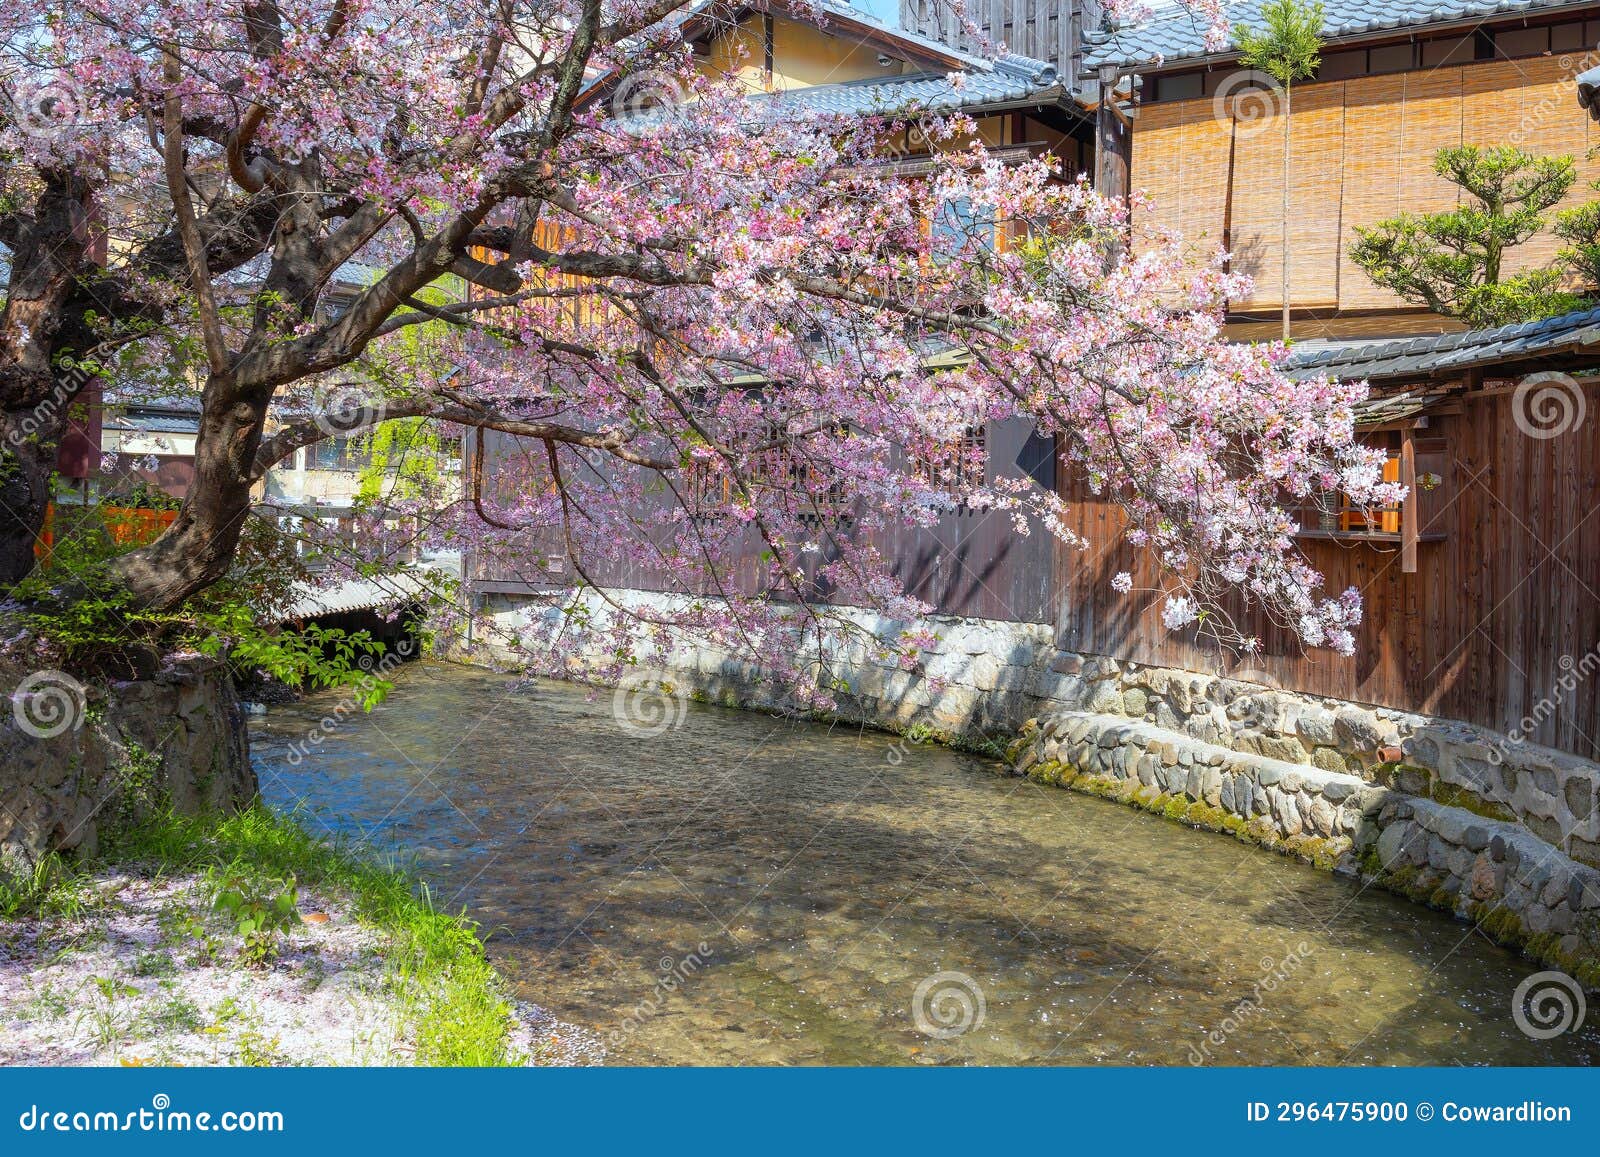 beautiful full bloom cherry blossom at shinbashi dori in kyoto, japan